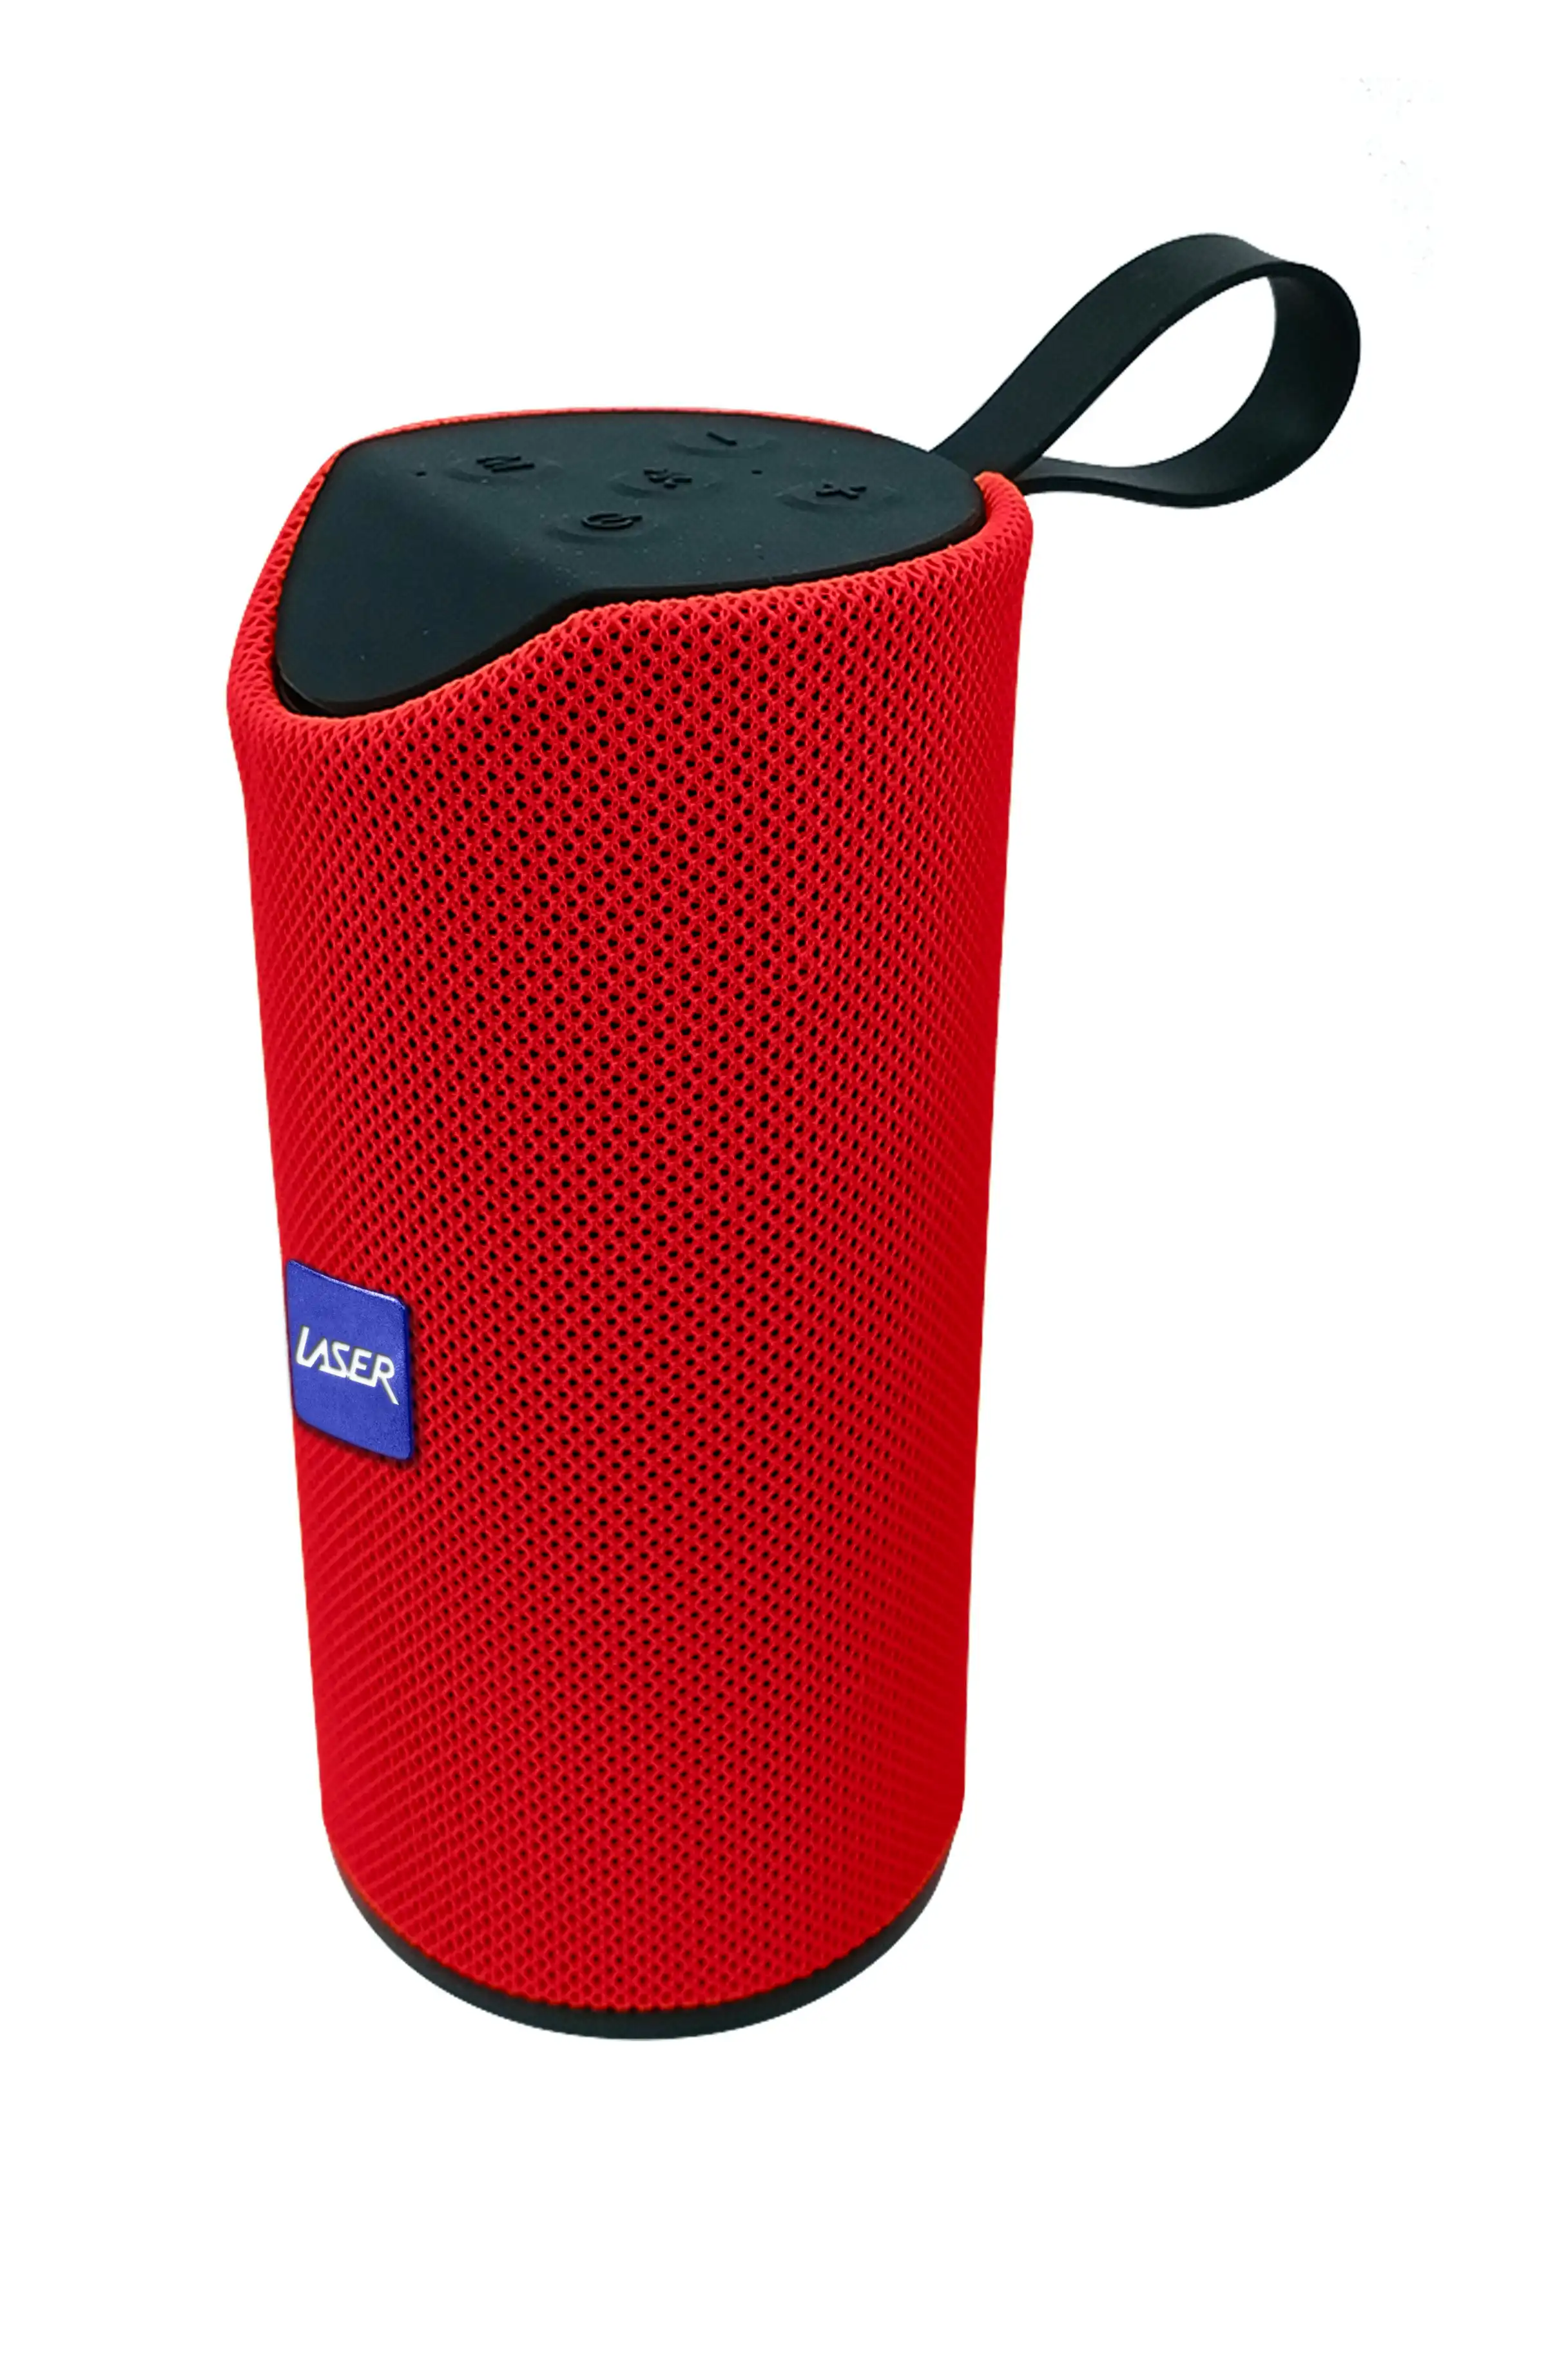 Laser Barrell Bluetooth Splashproof Speaker Red